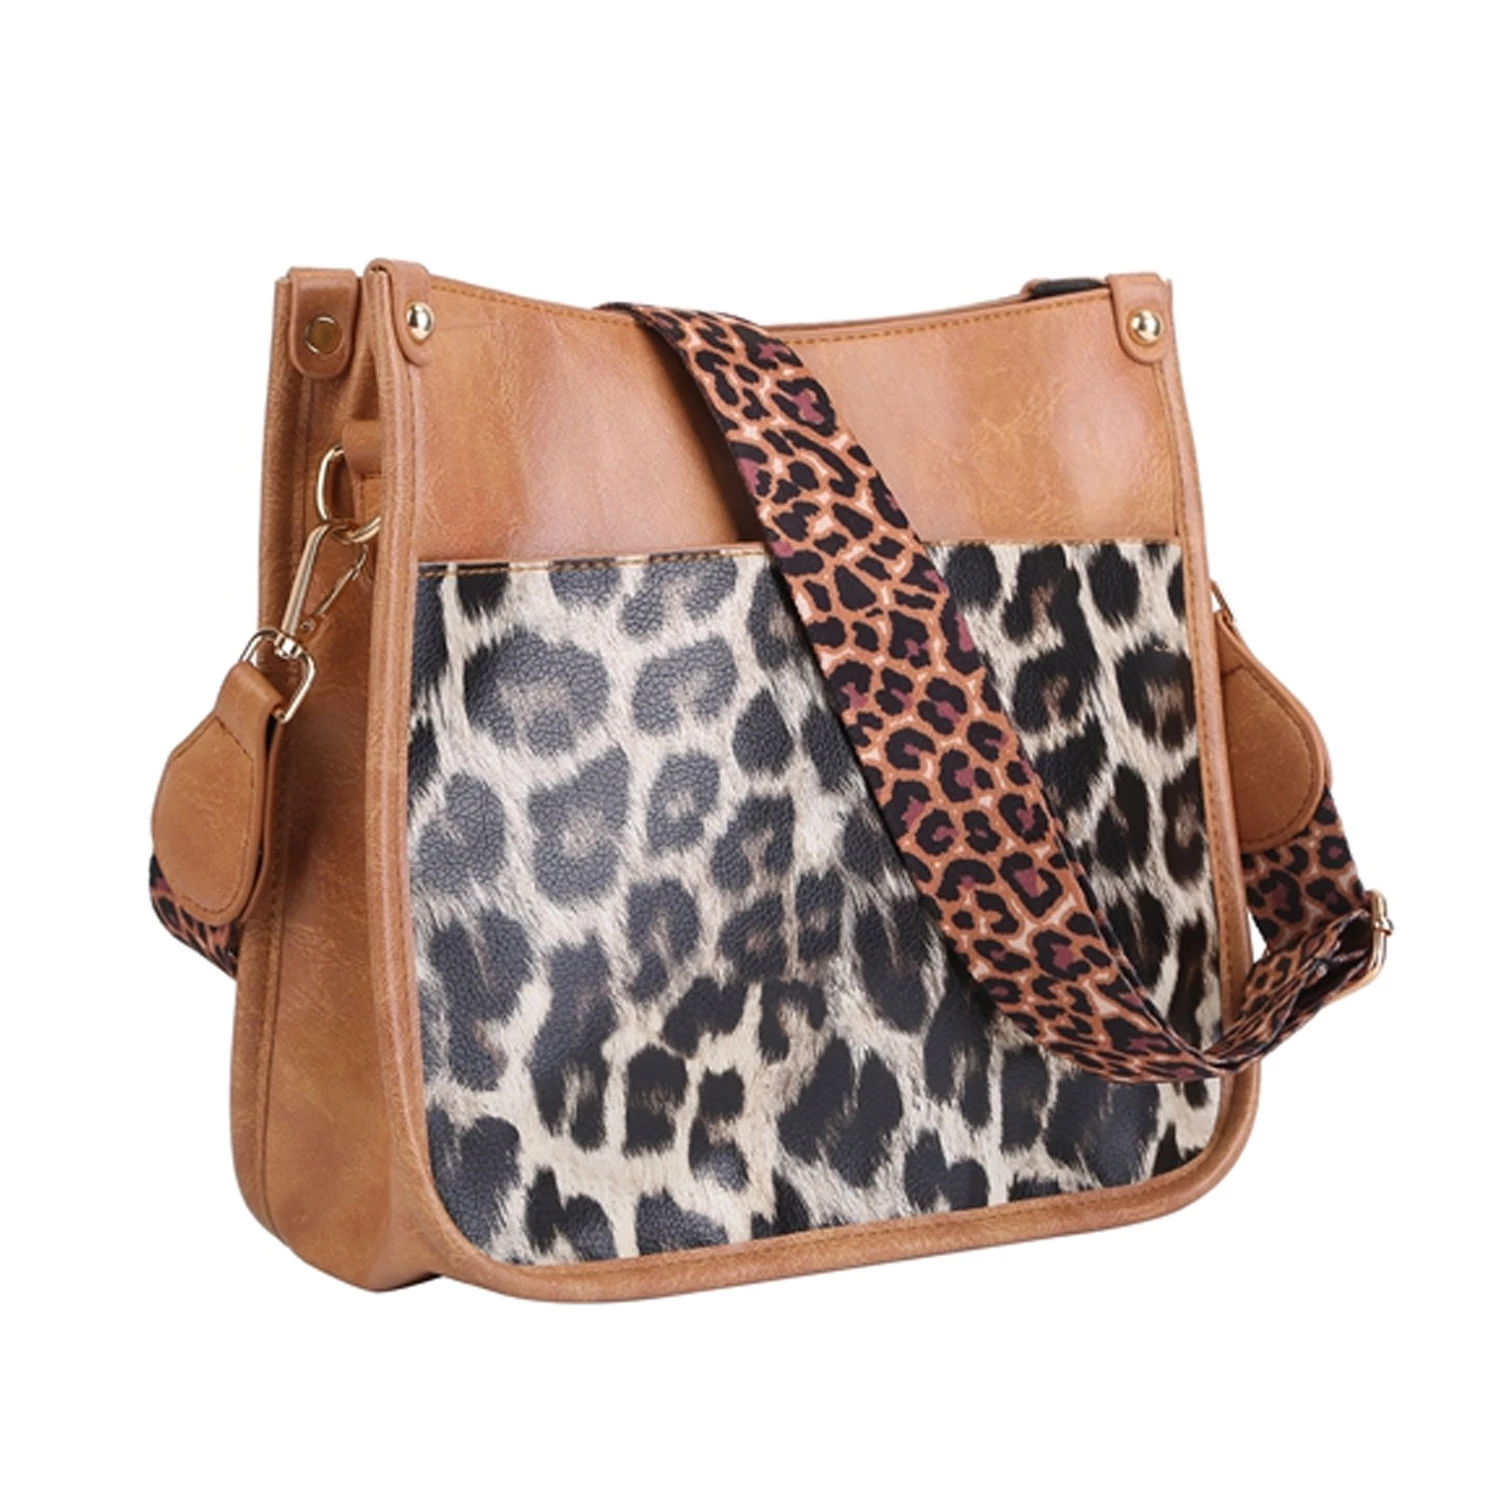 Women's Fashion Leather Crossbody Bag Shoulder Bag Casual Handbag With Flexible Wearing Styles